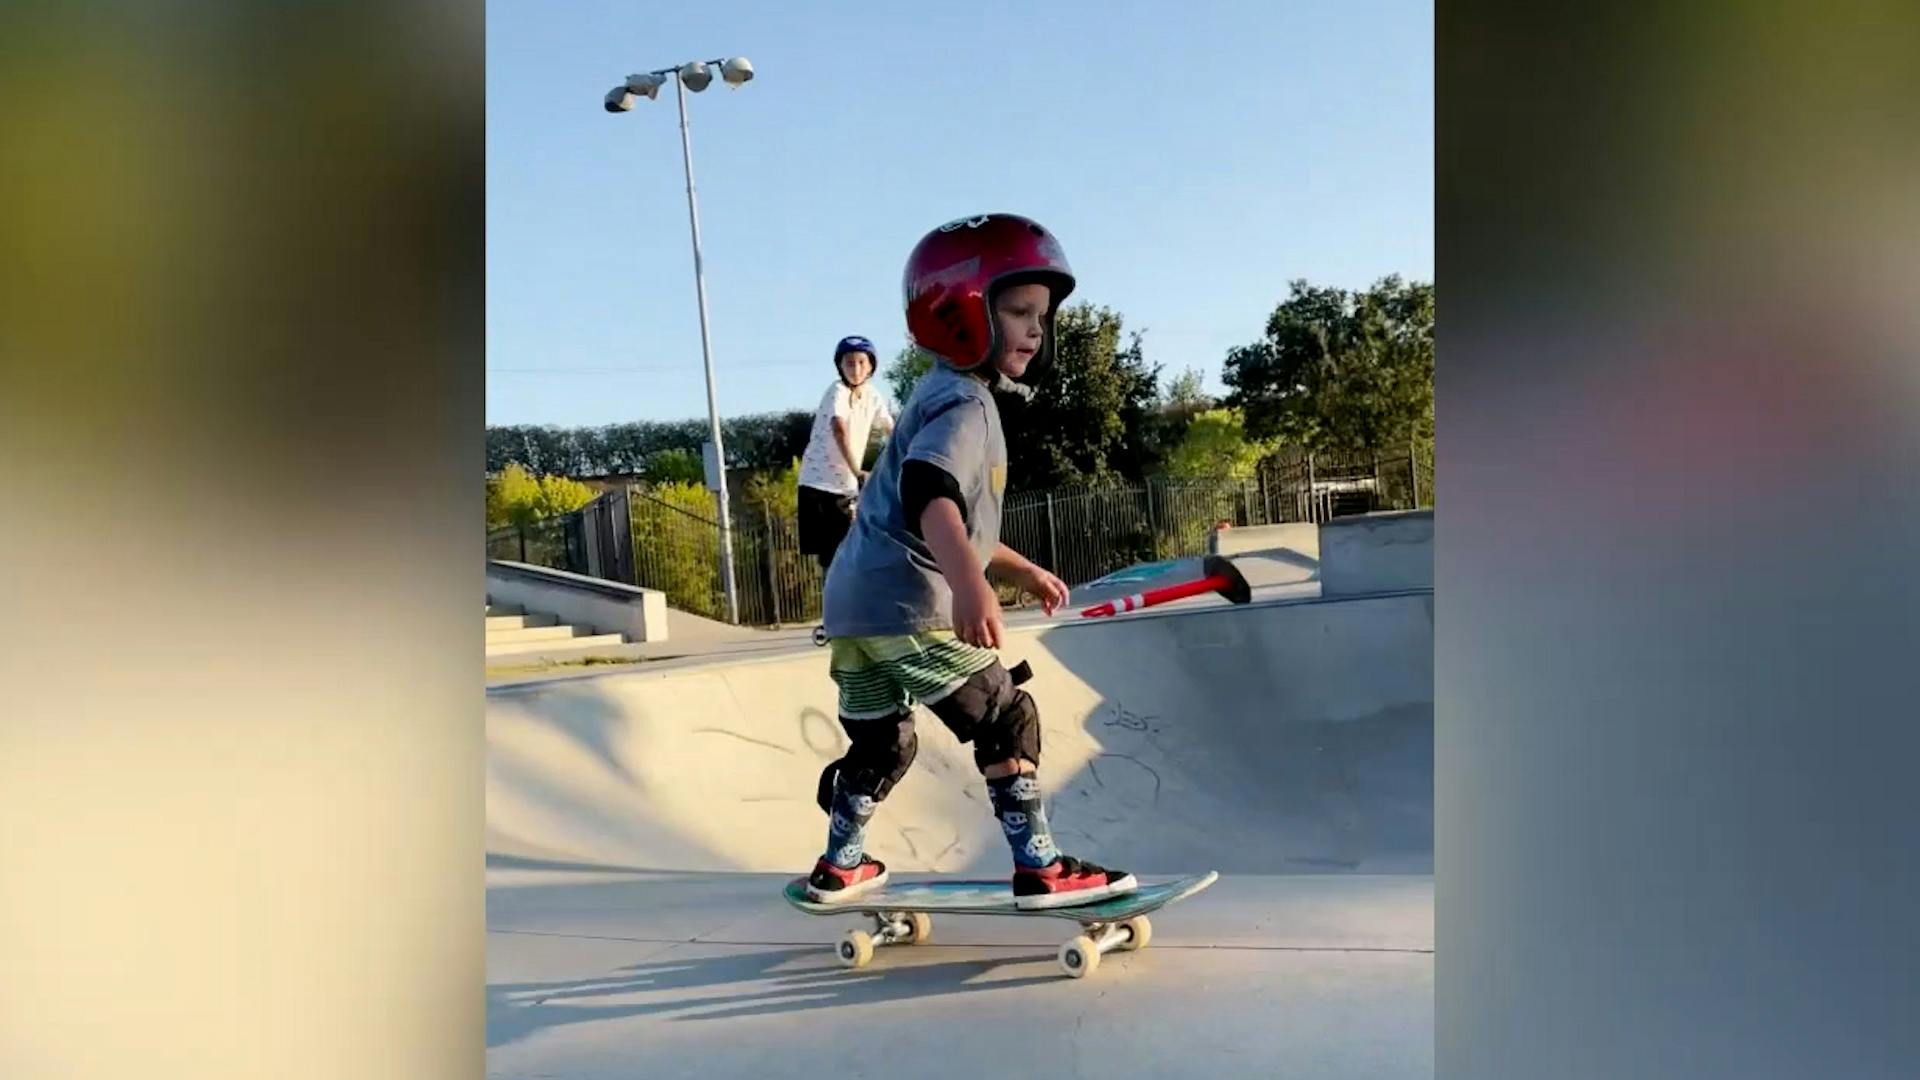 vlot explosie Graden Celsius Deze 3-jarige peuter doet kunstjes op skateboard